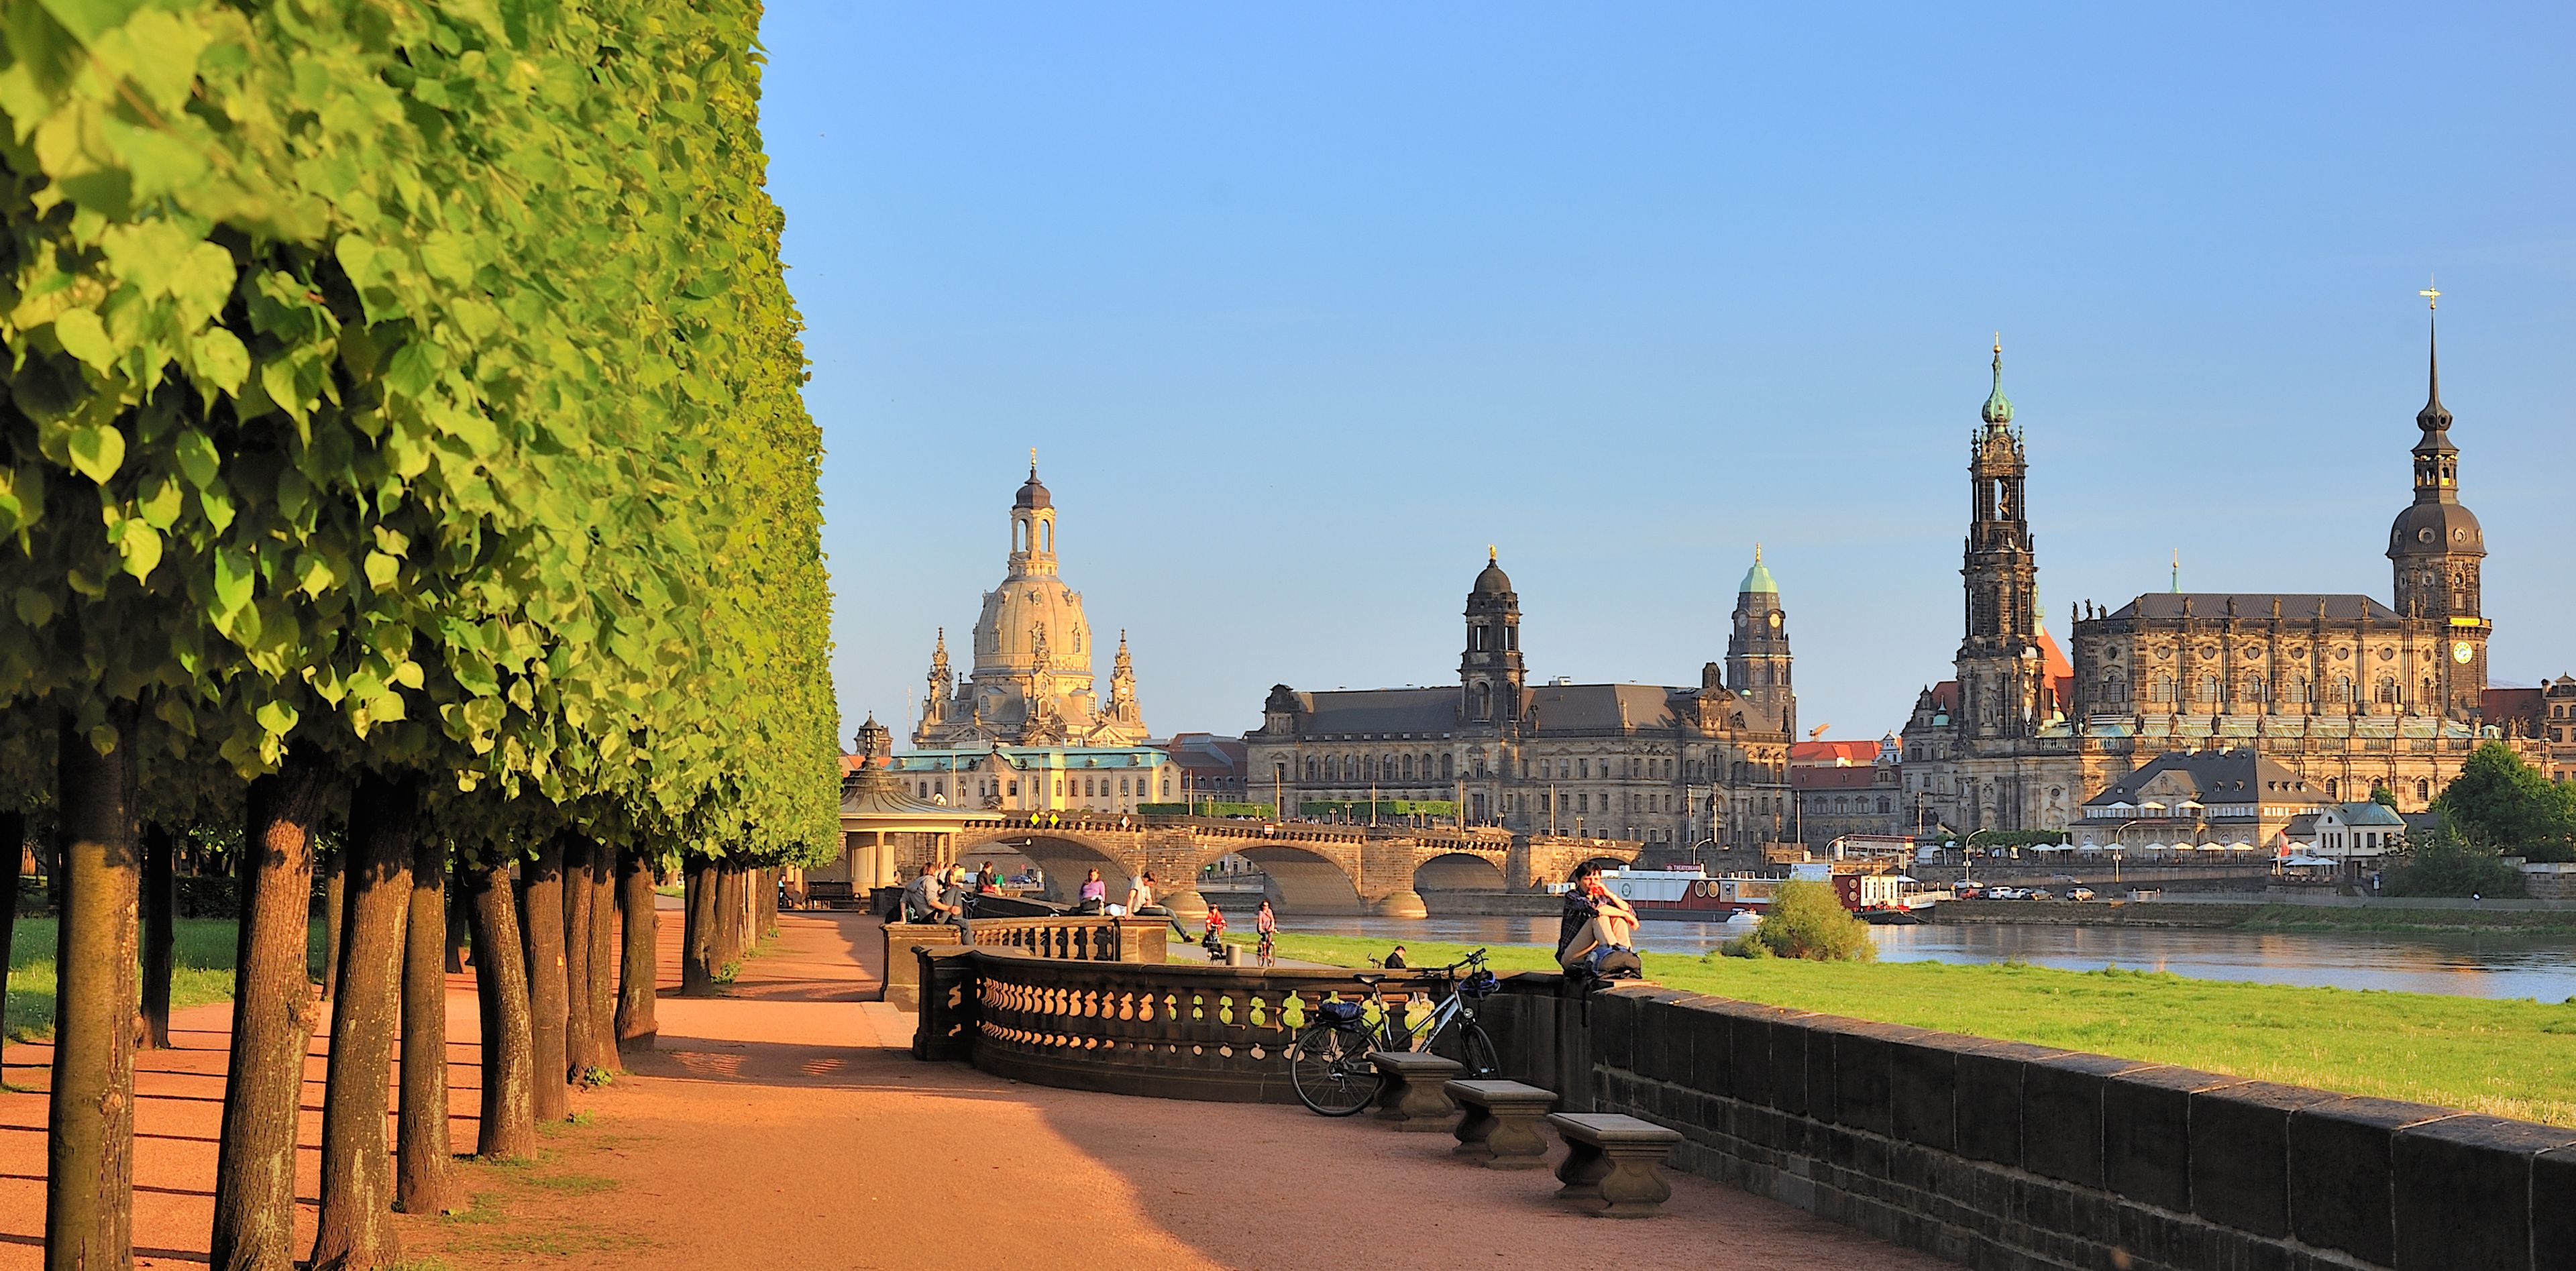 Dresden Neustadt